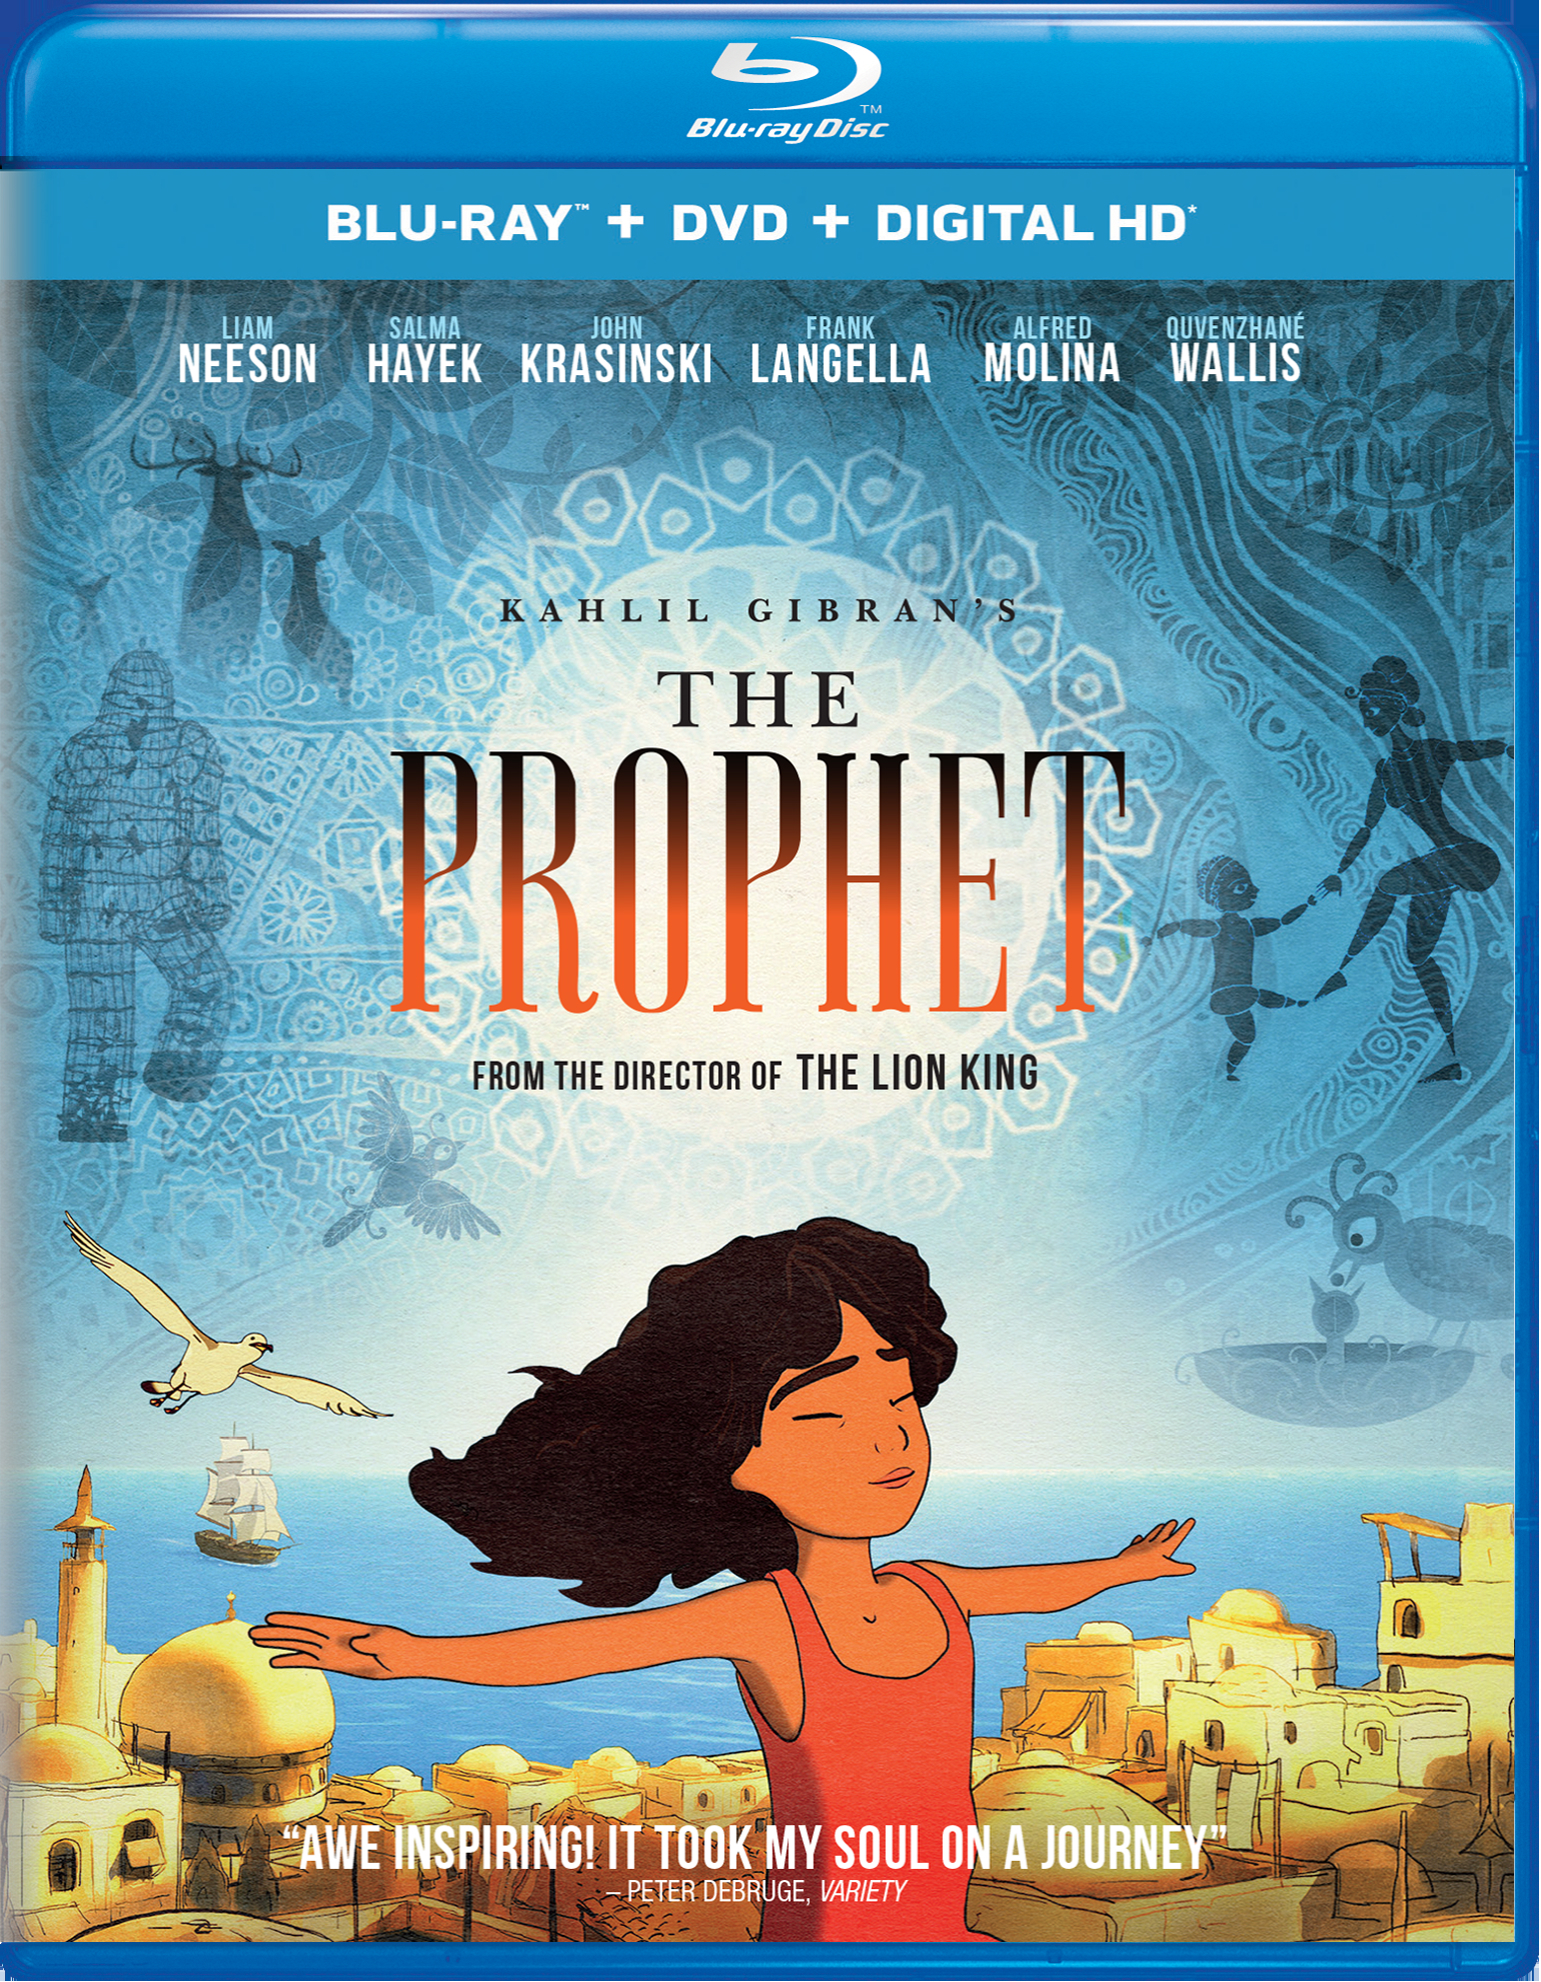 Kahlil Gibran's The Prophet (DVD + Digital) - Blu-ray [ 2015 ]  - Animation Movies On Blu-ray - Movies On GRUV